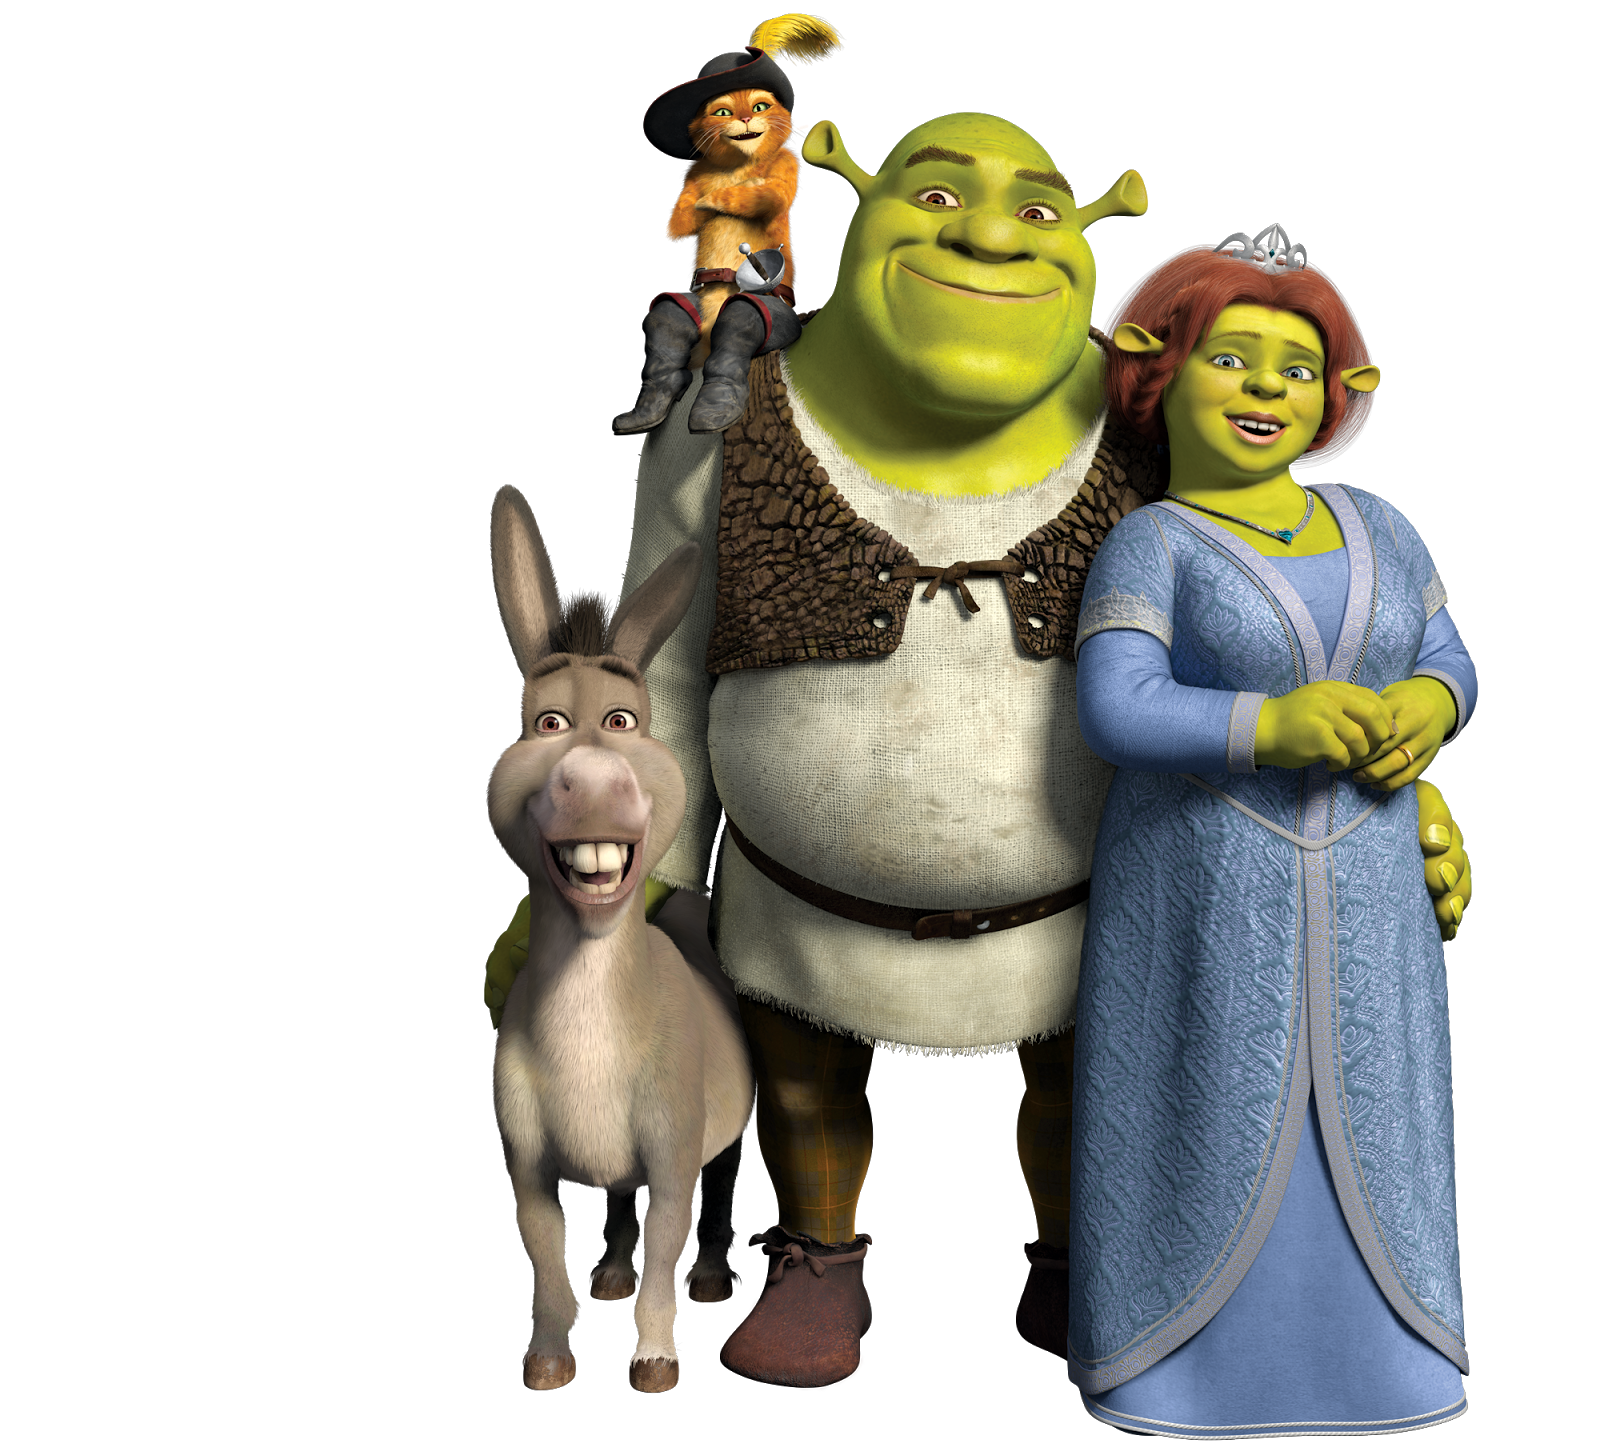 Alas 3 Lads: Shrek 15th Anniversary Edition Blu-ray/DVD Giveaway #